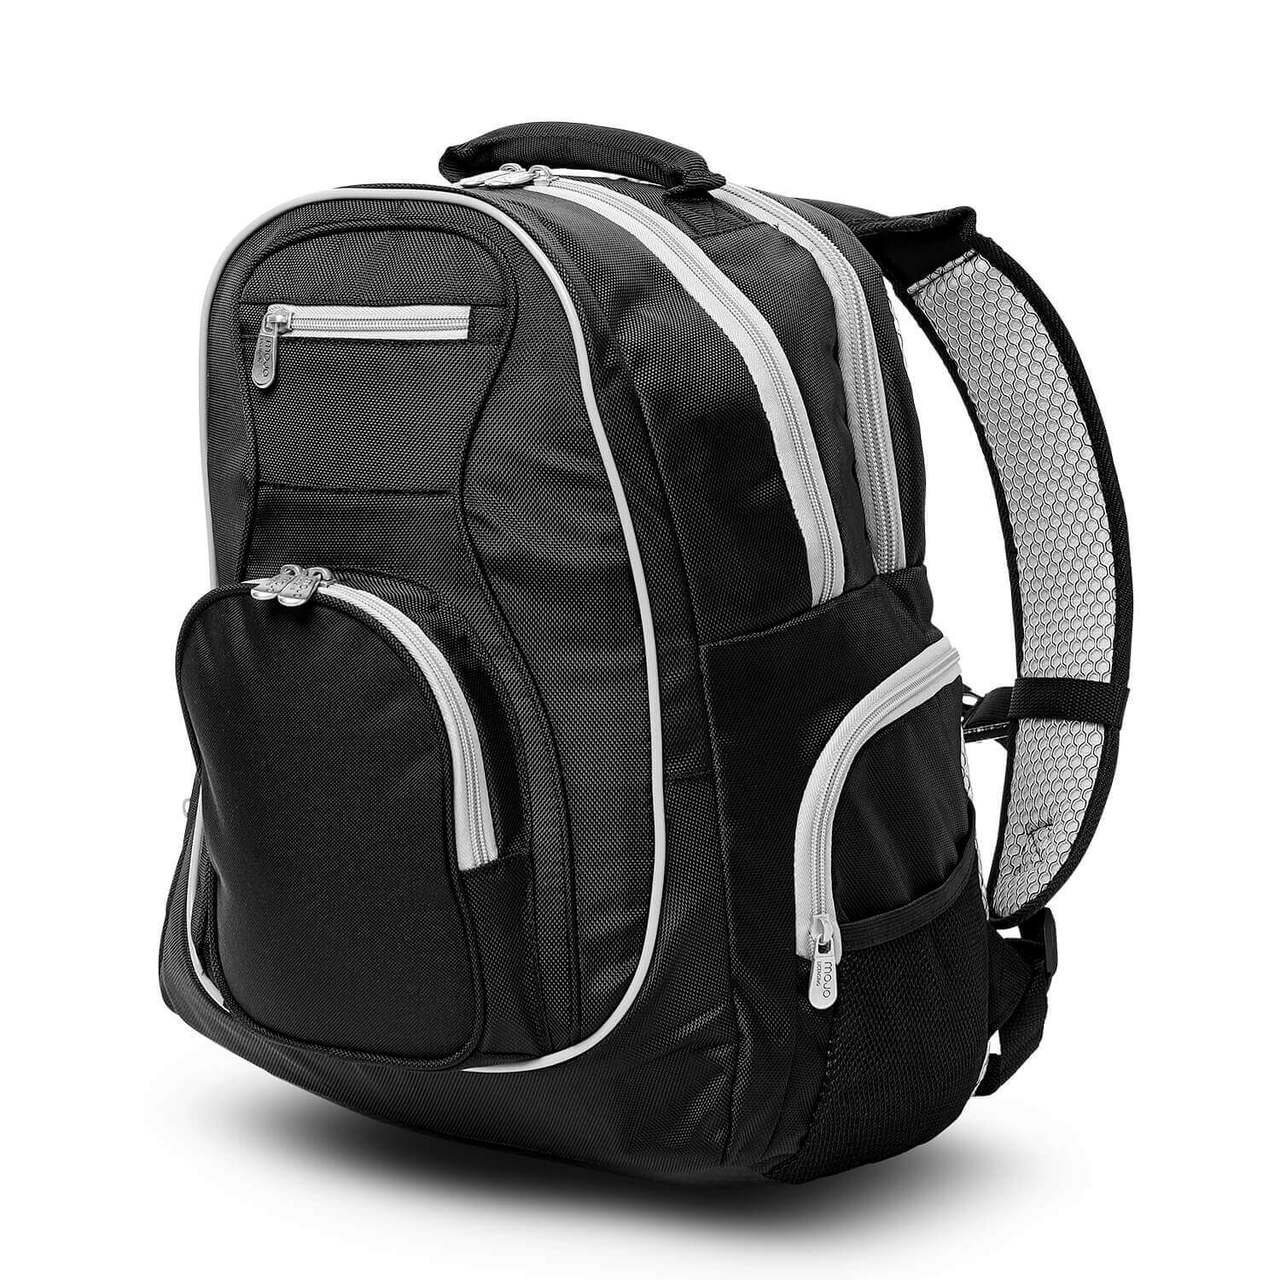 San Antonio Spurs 2 Piece Premium Colored Trim Backpack and Luggage Set